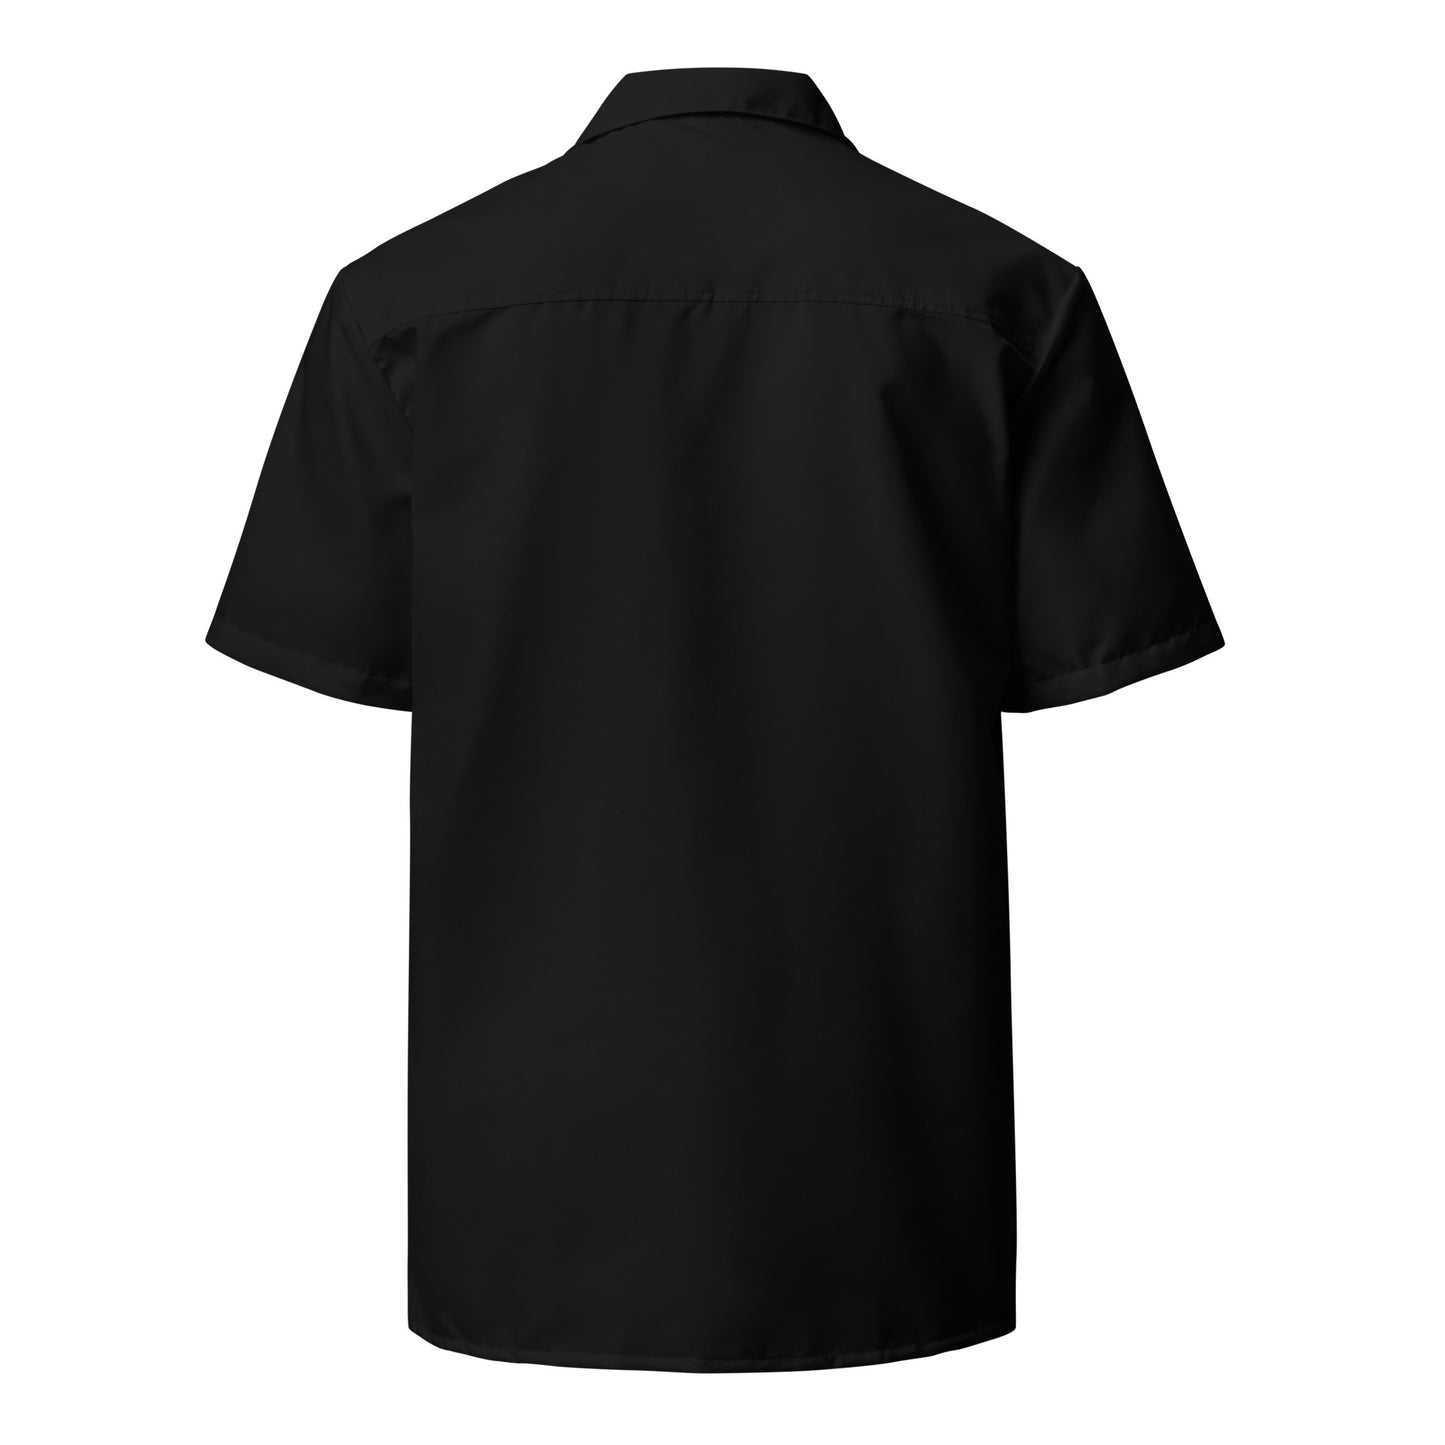 Men's Travel Black Button Shirt